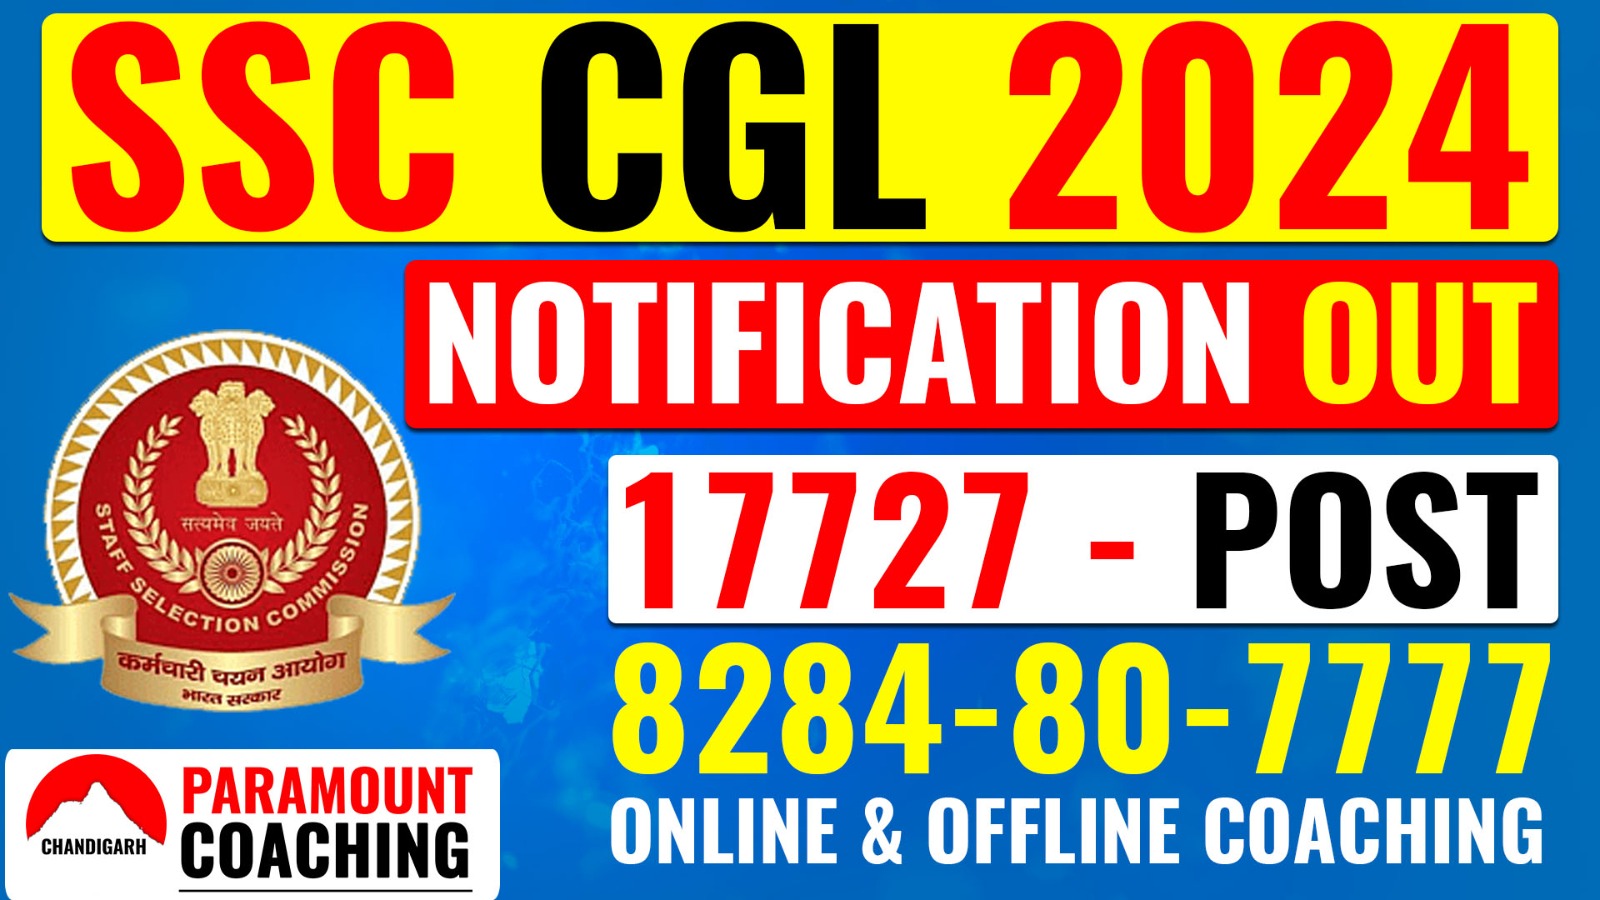 SSC Coaching in Chandigarh | 828480-7777 | Paramount CHD